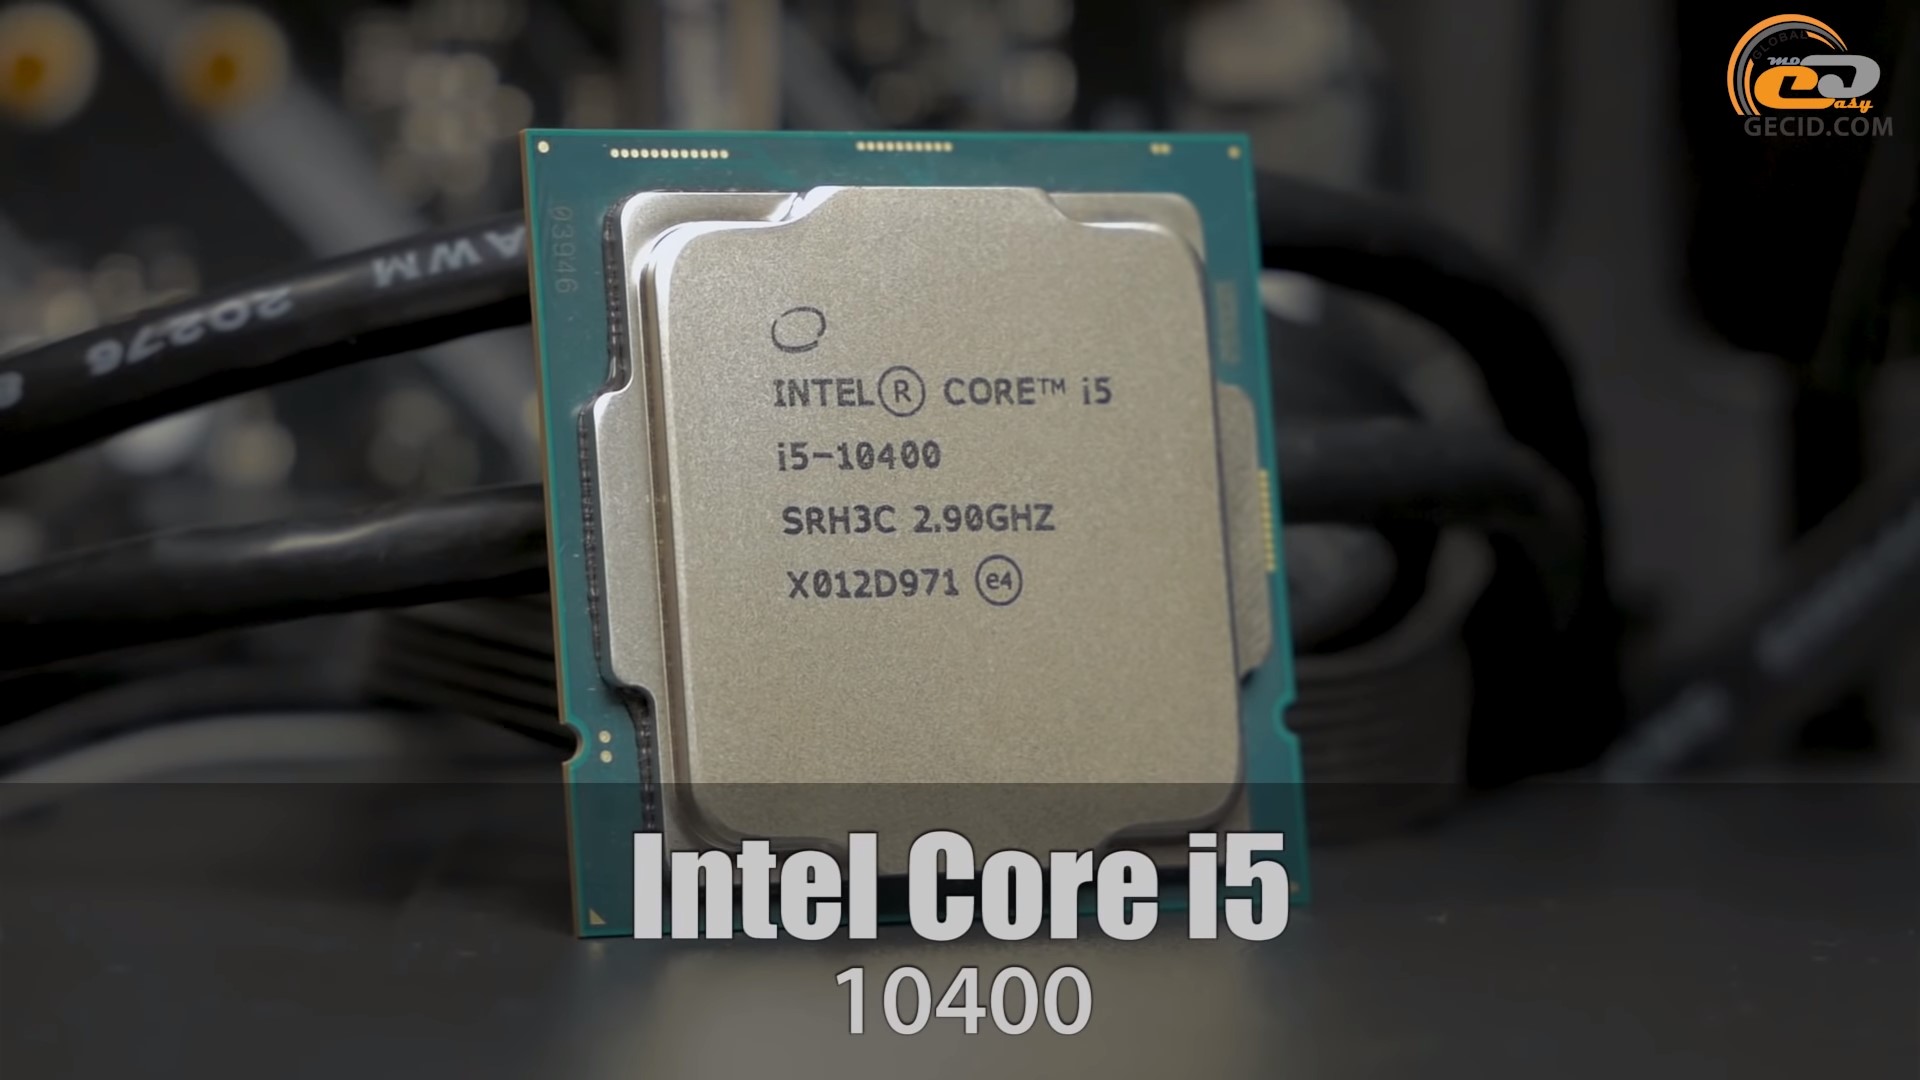 Тест Intel Core i5-10400 з DDR4-2666 і DDR4-3200: цікаво «камені